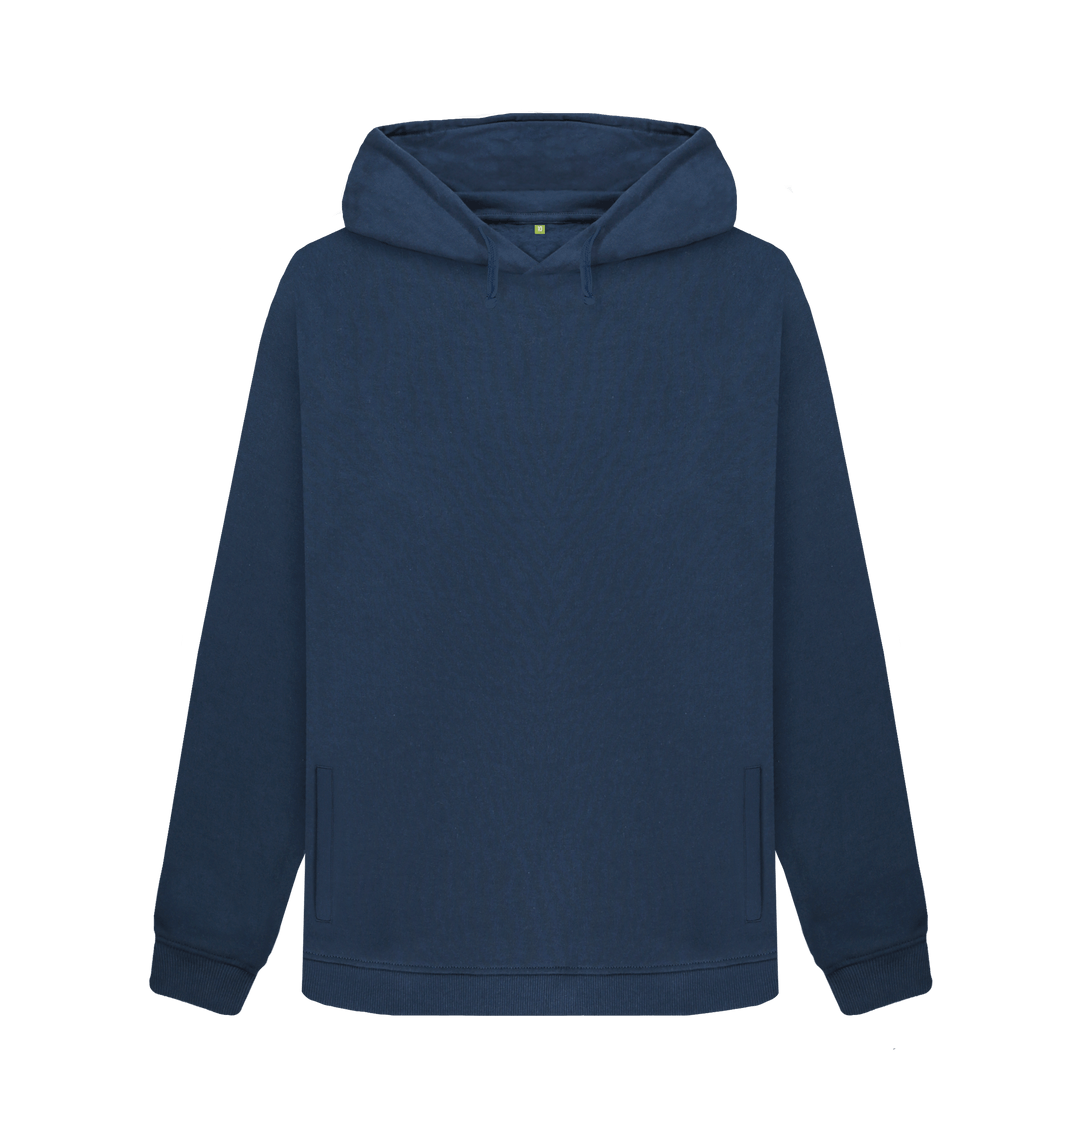 Navy Blue Plain Hoodie For Women – THATCHIMP